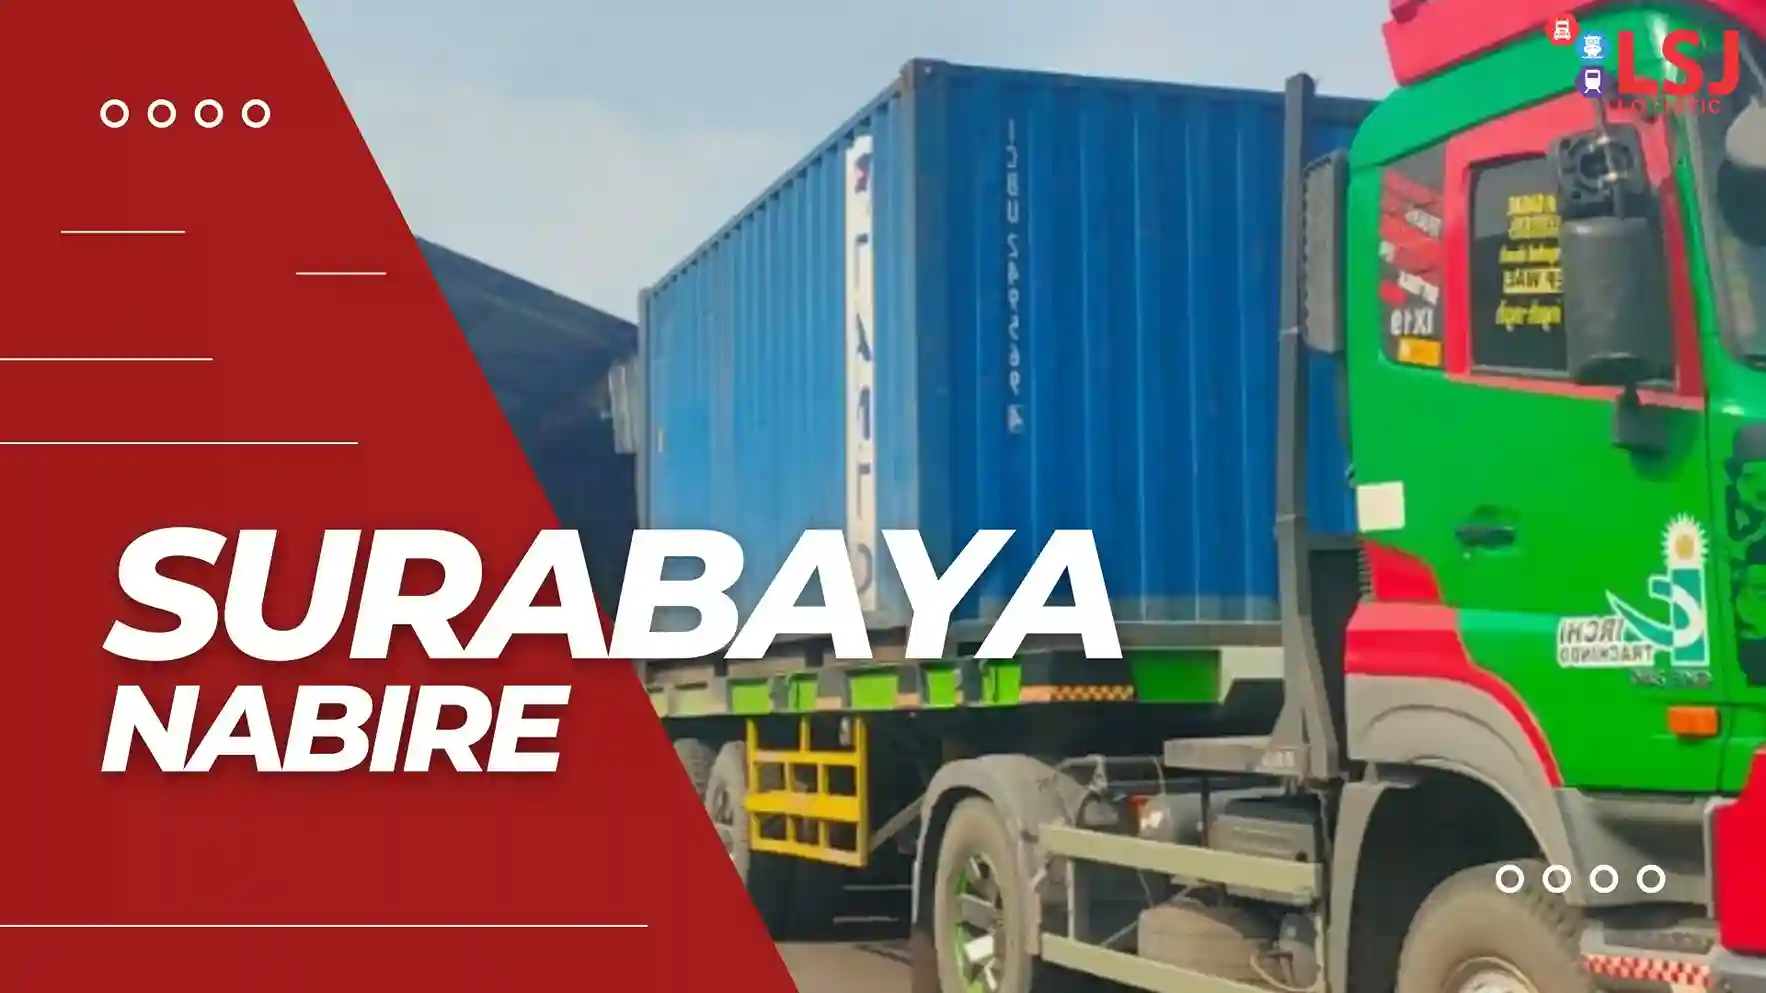 Harga Pengiriman Container Surabaya Nabire